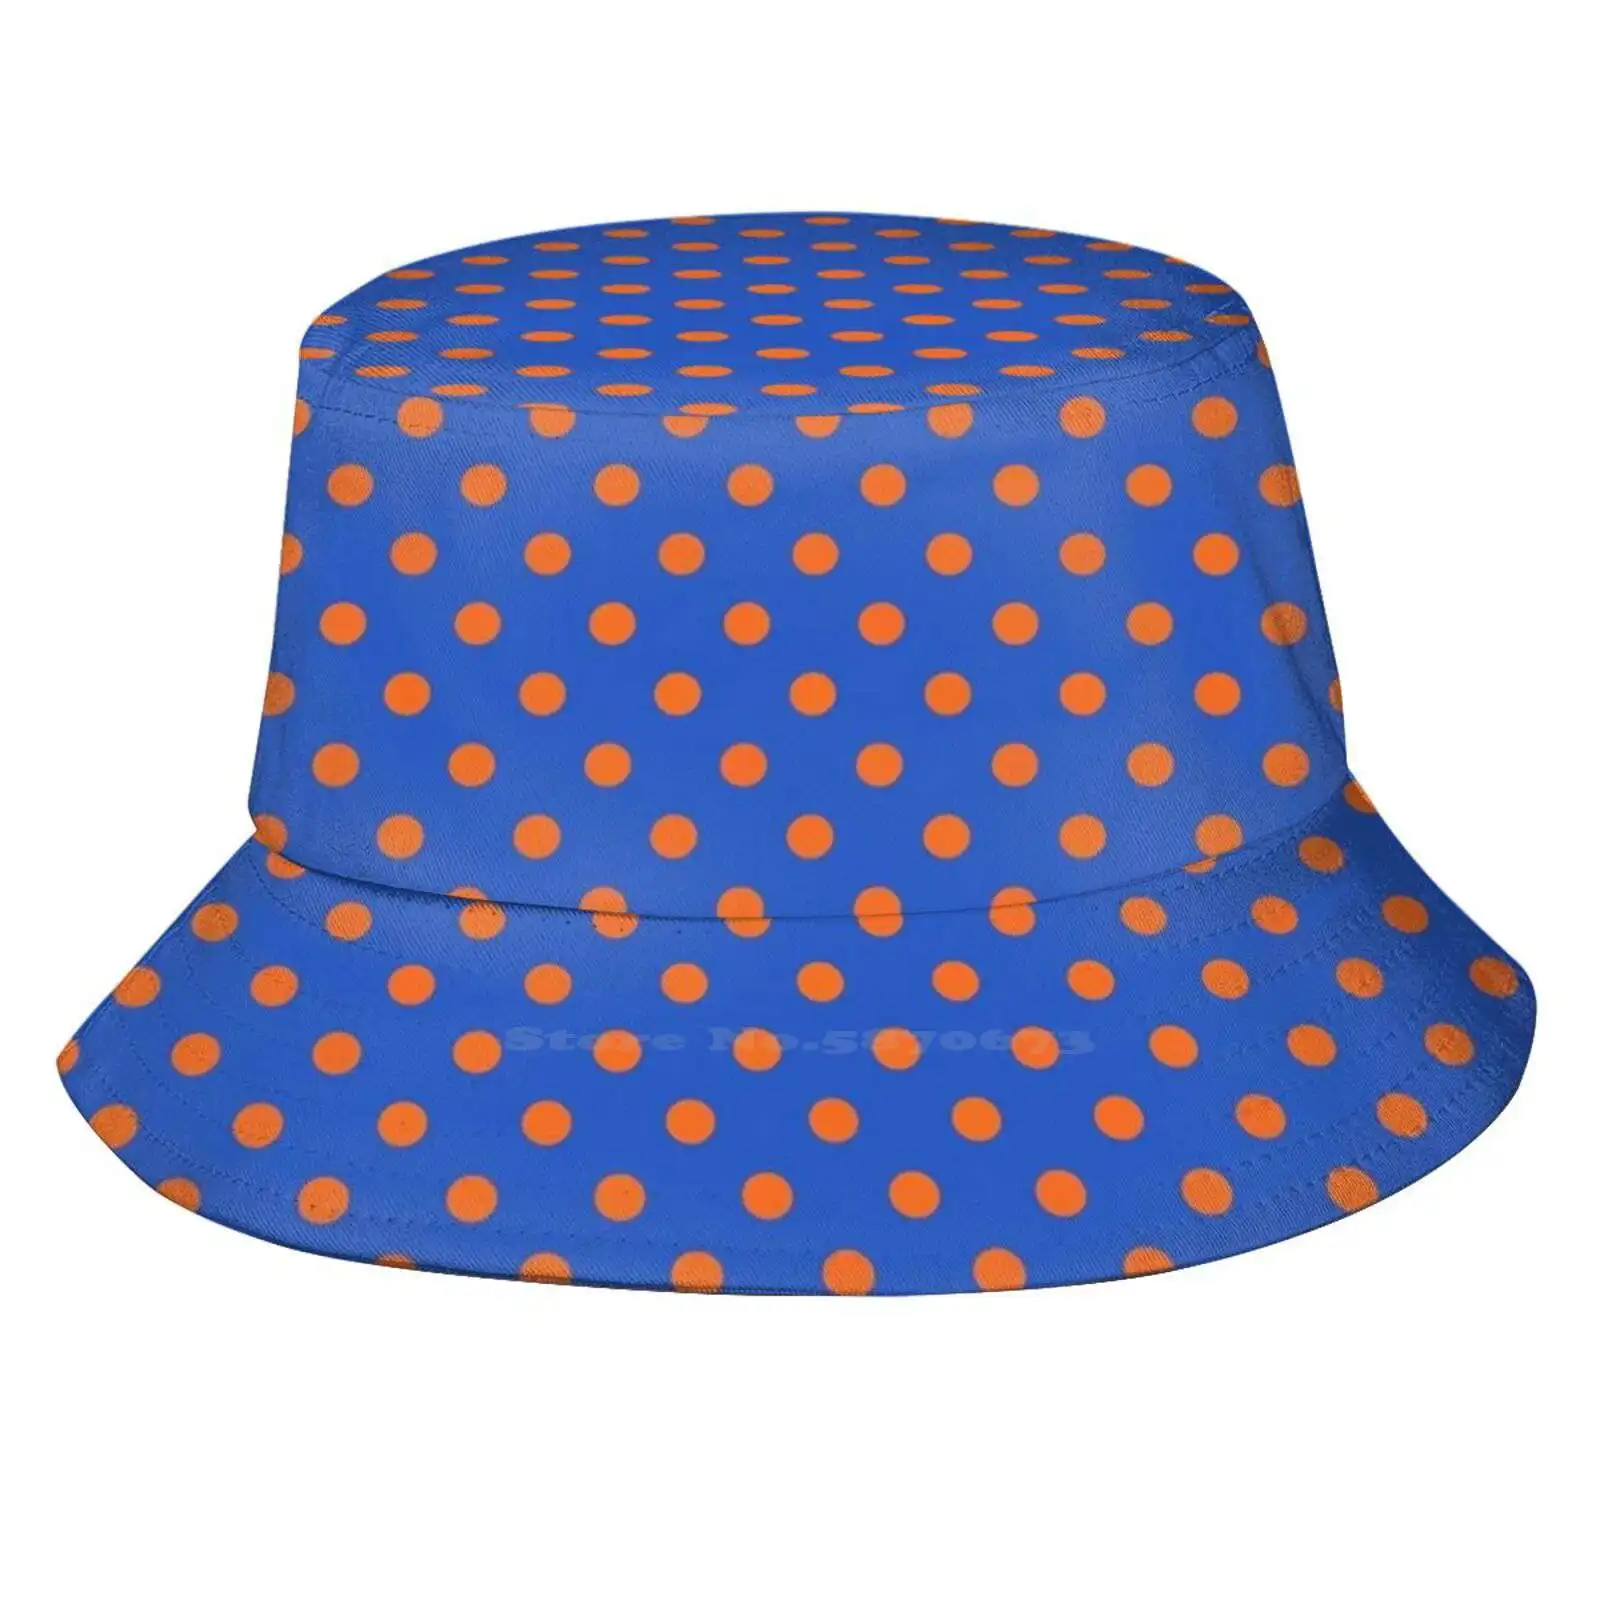 

Blue And Orange Polka Dot Outdoor Sun Fishing Panama Hats Pattern Designs Blue Orange Polkadots Polka Dots Small Dotted Spots